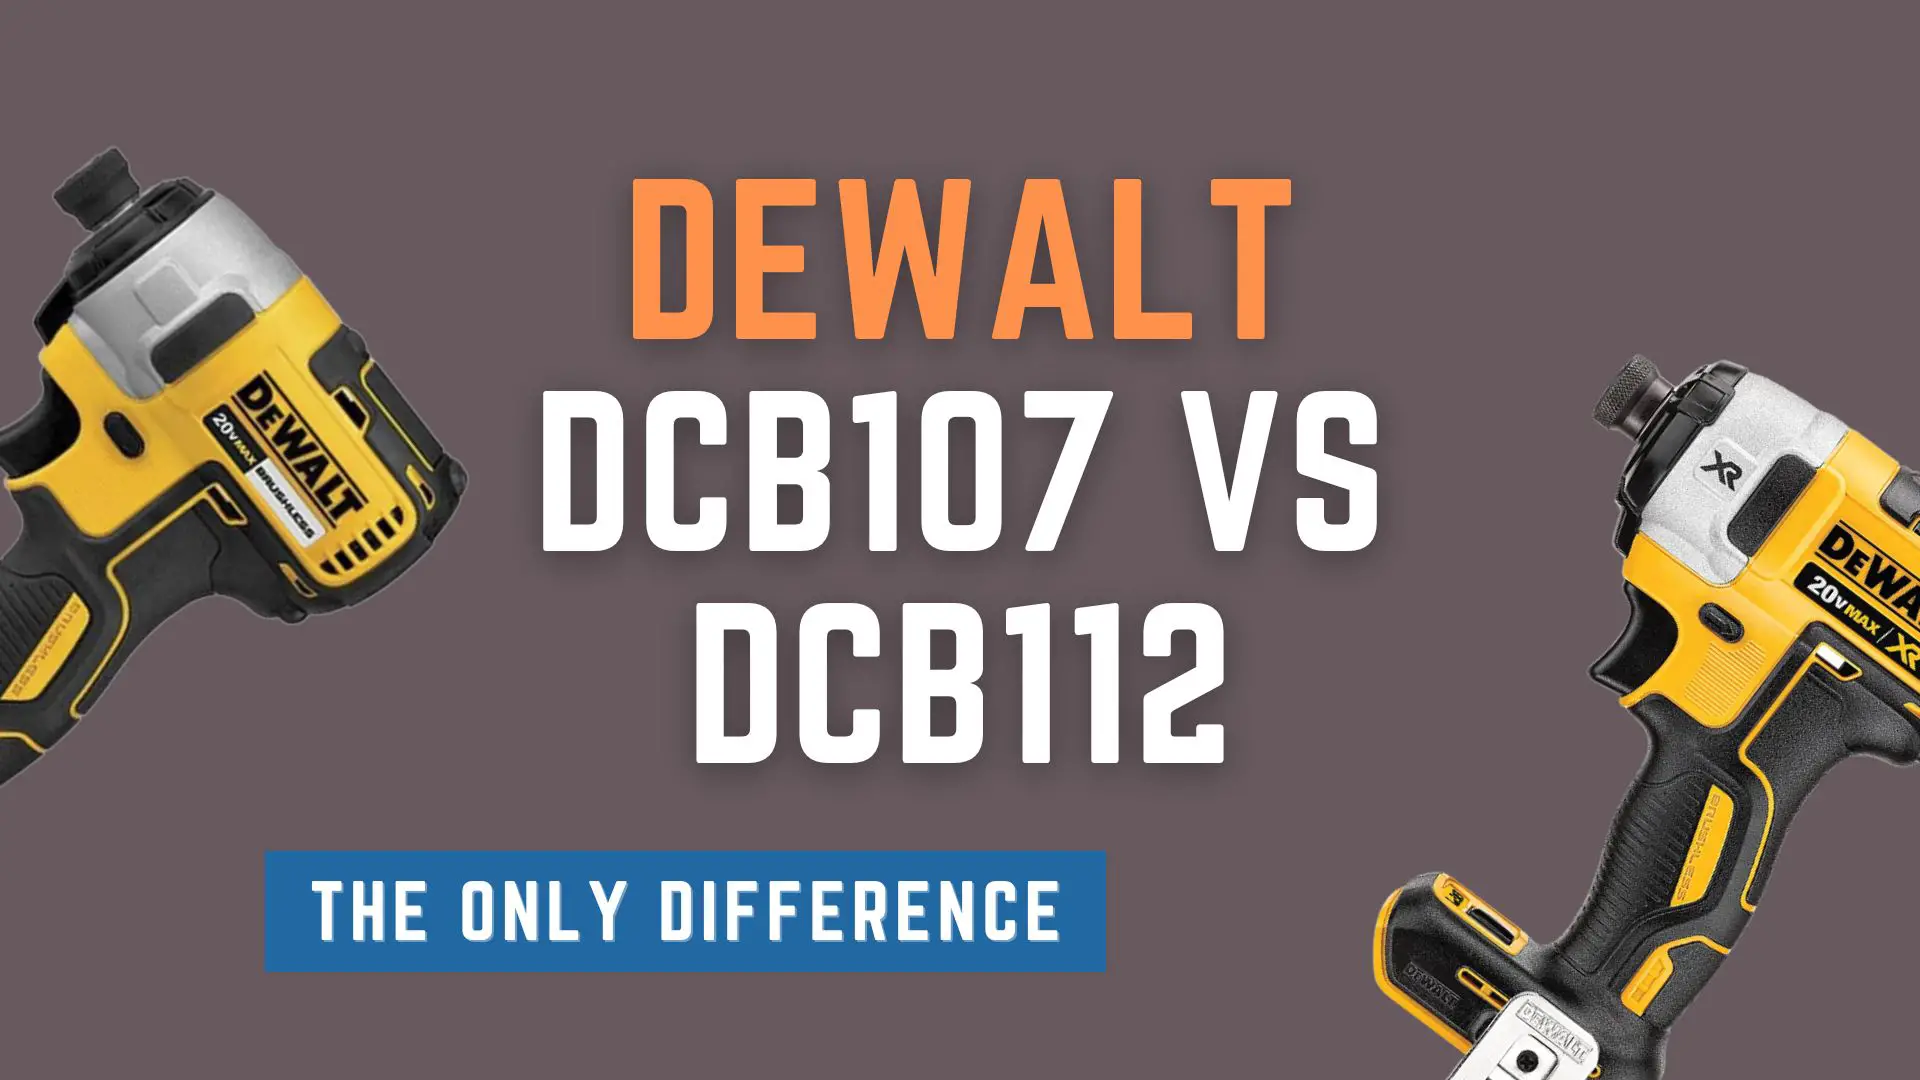 DeWALT DCF787 vs DCF887